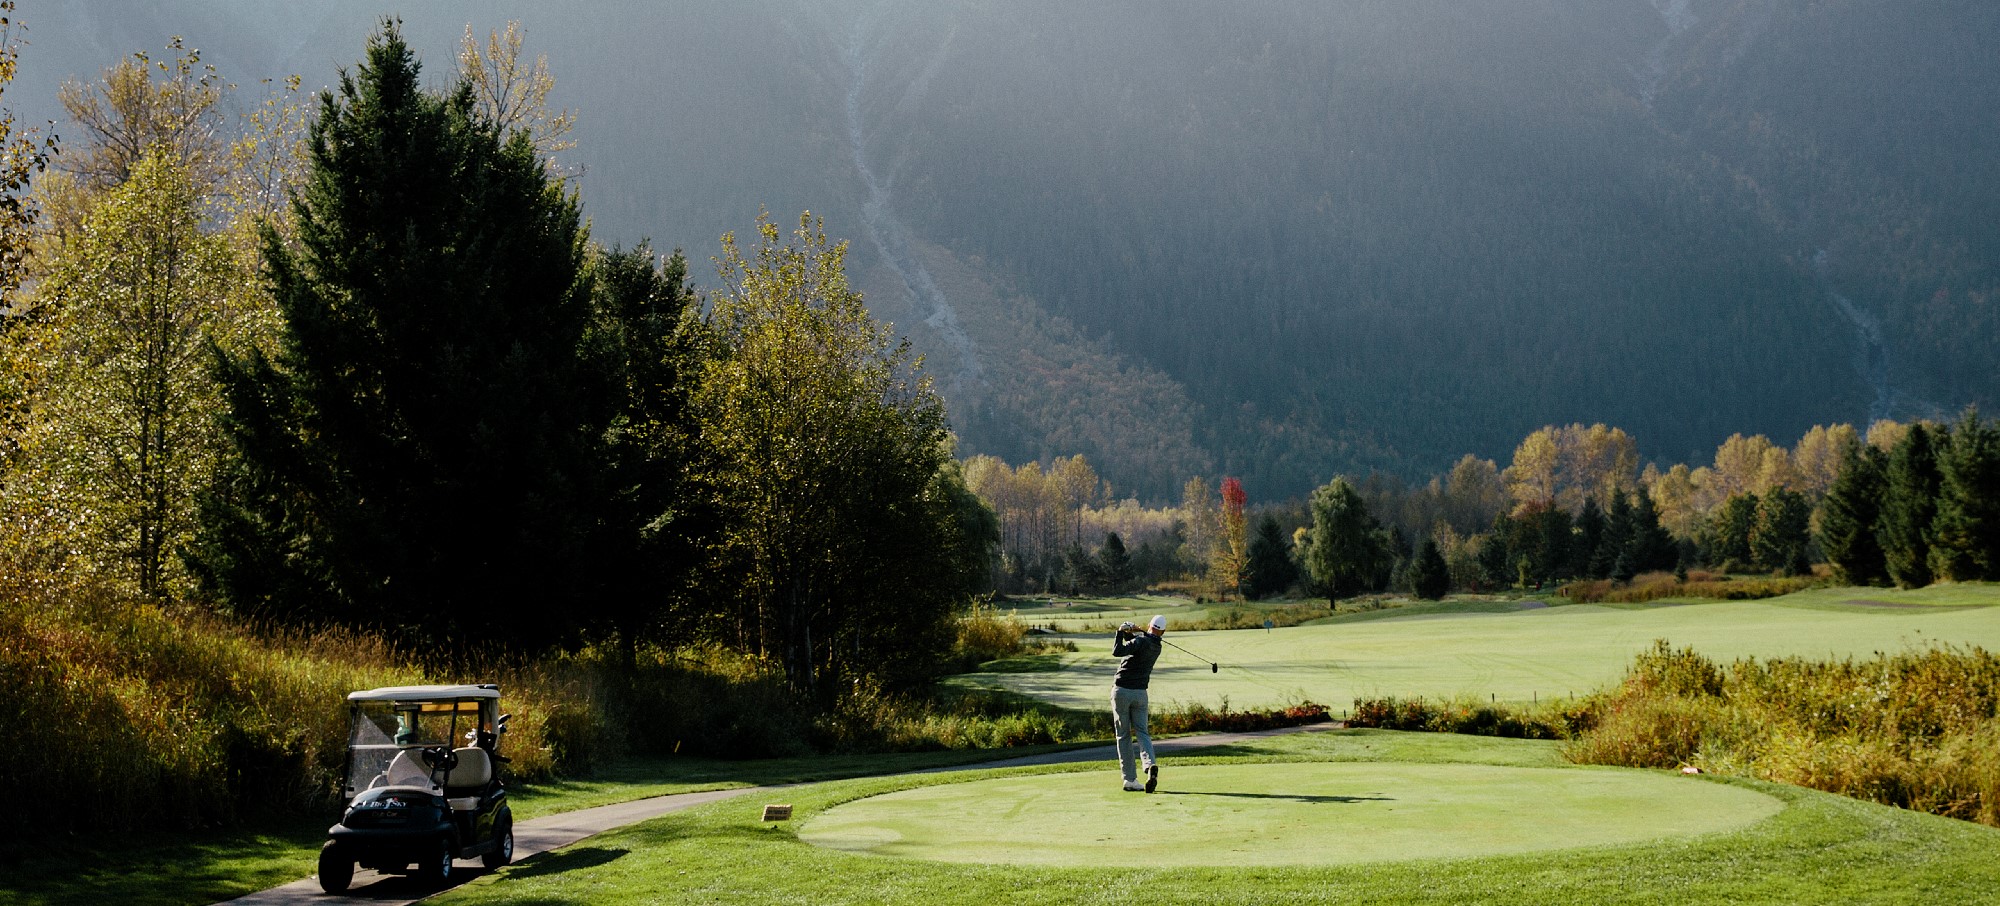 Big Sky Golf Club, Pemberton, Photo Destination BC Grant Harder